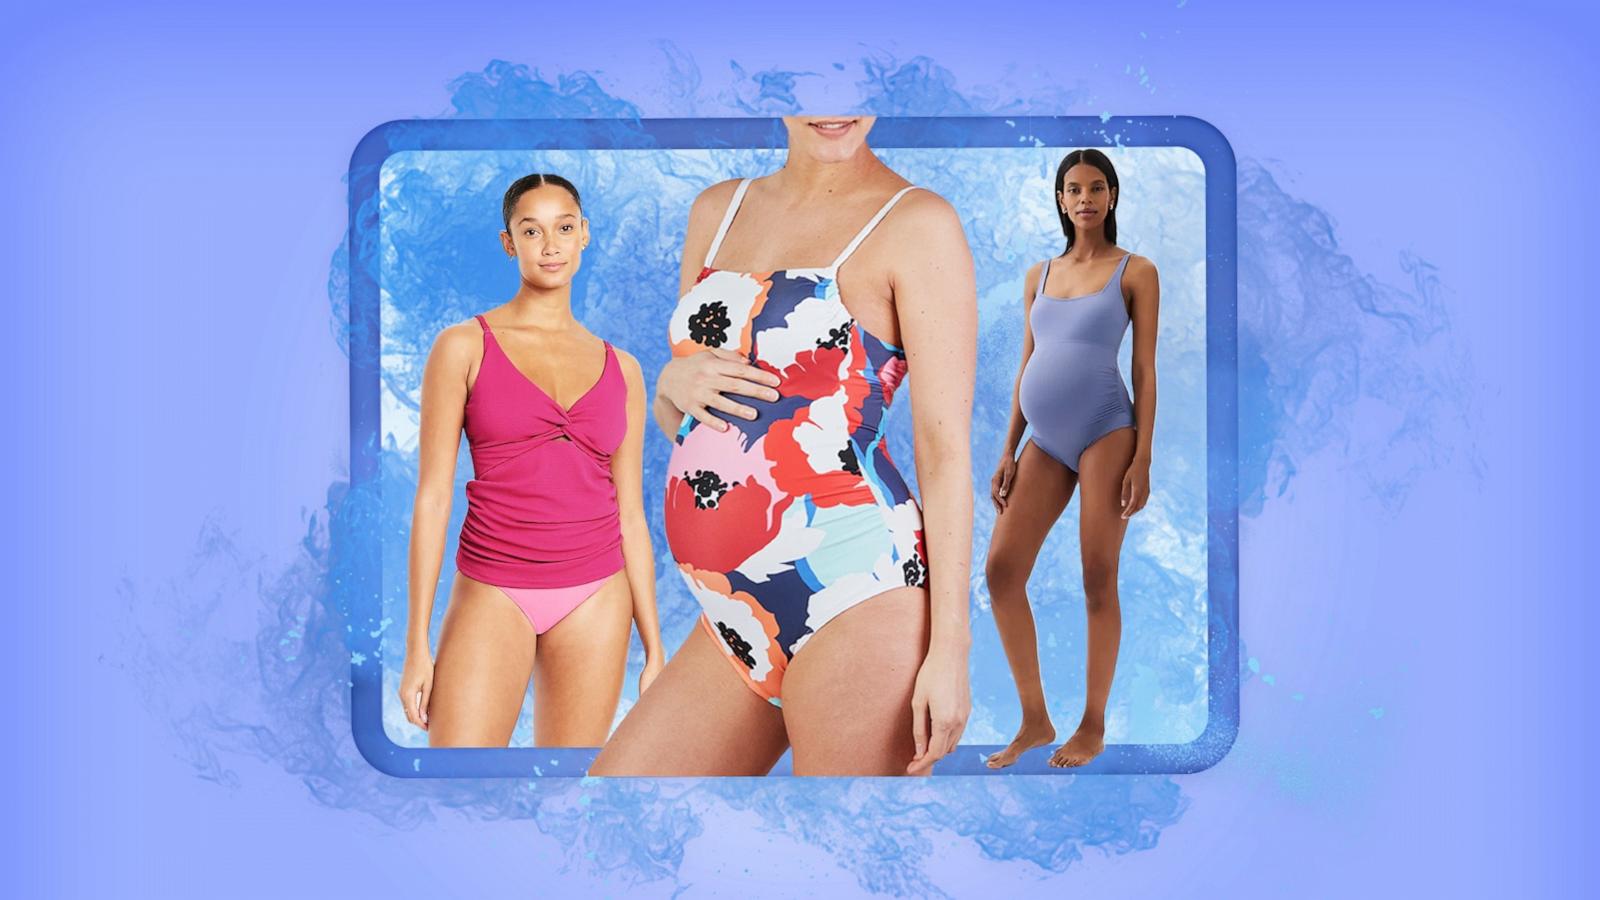 Maternity Swimwear - Maternity Tankinis & Bikinis